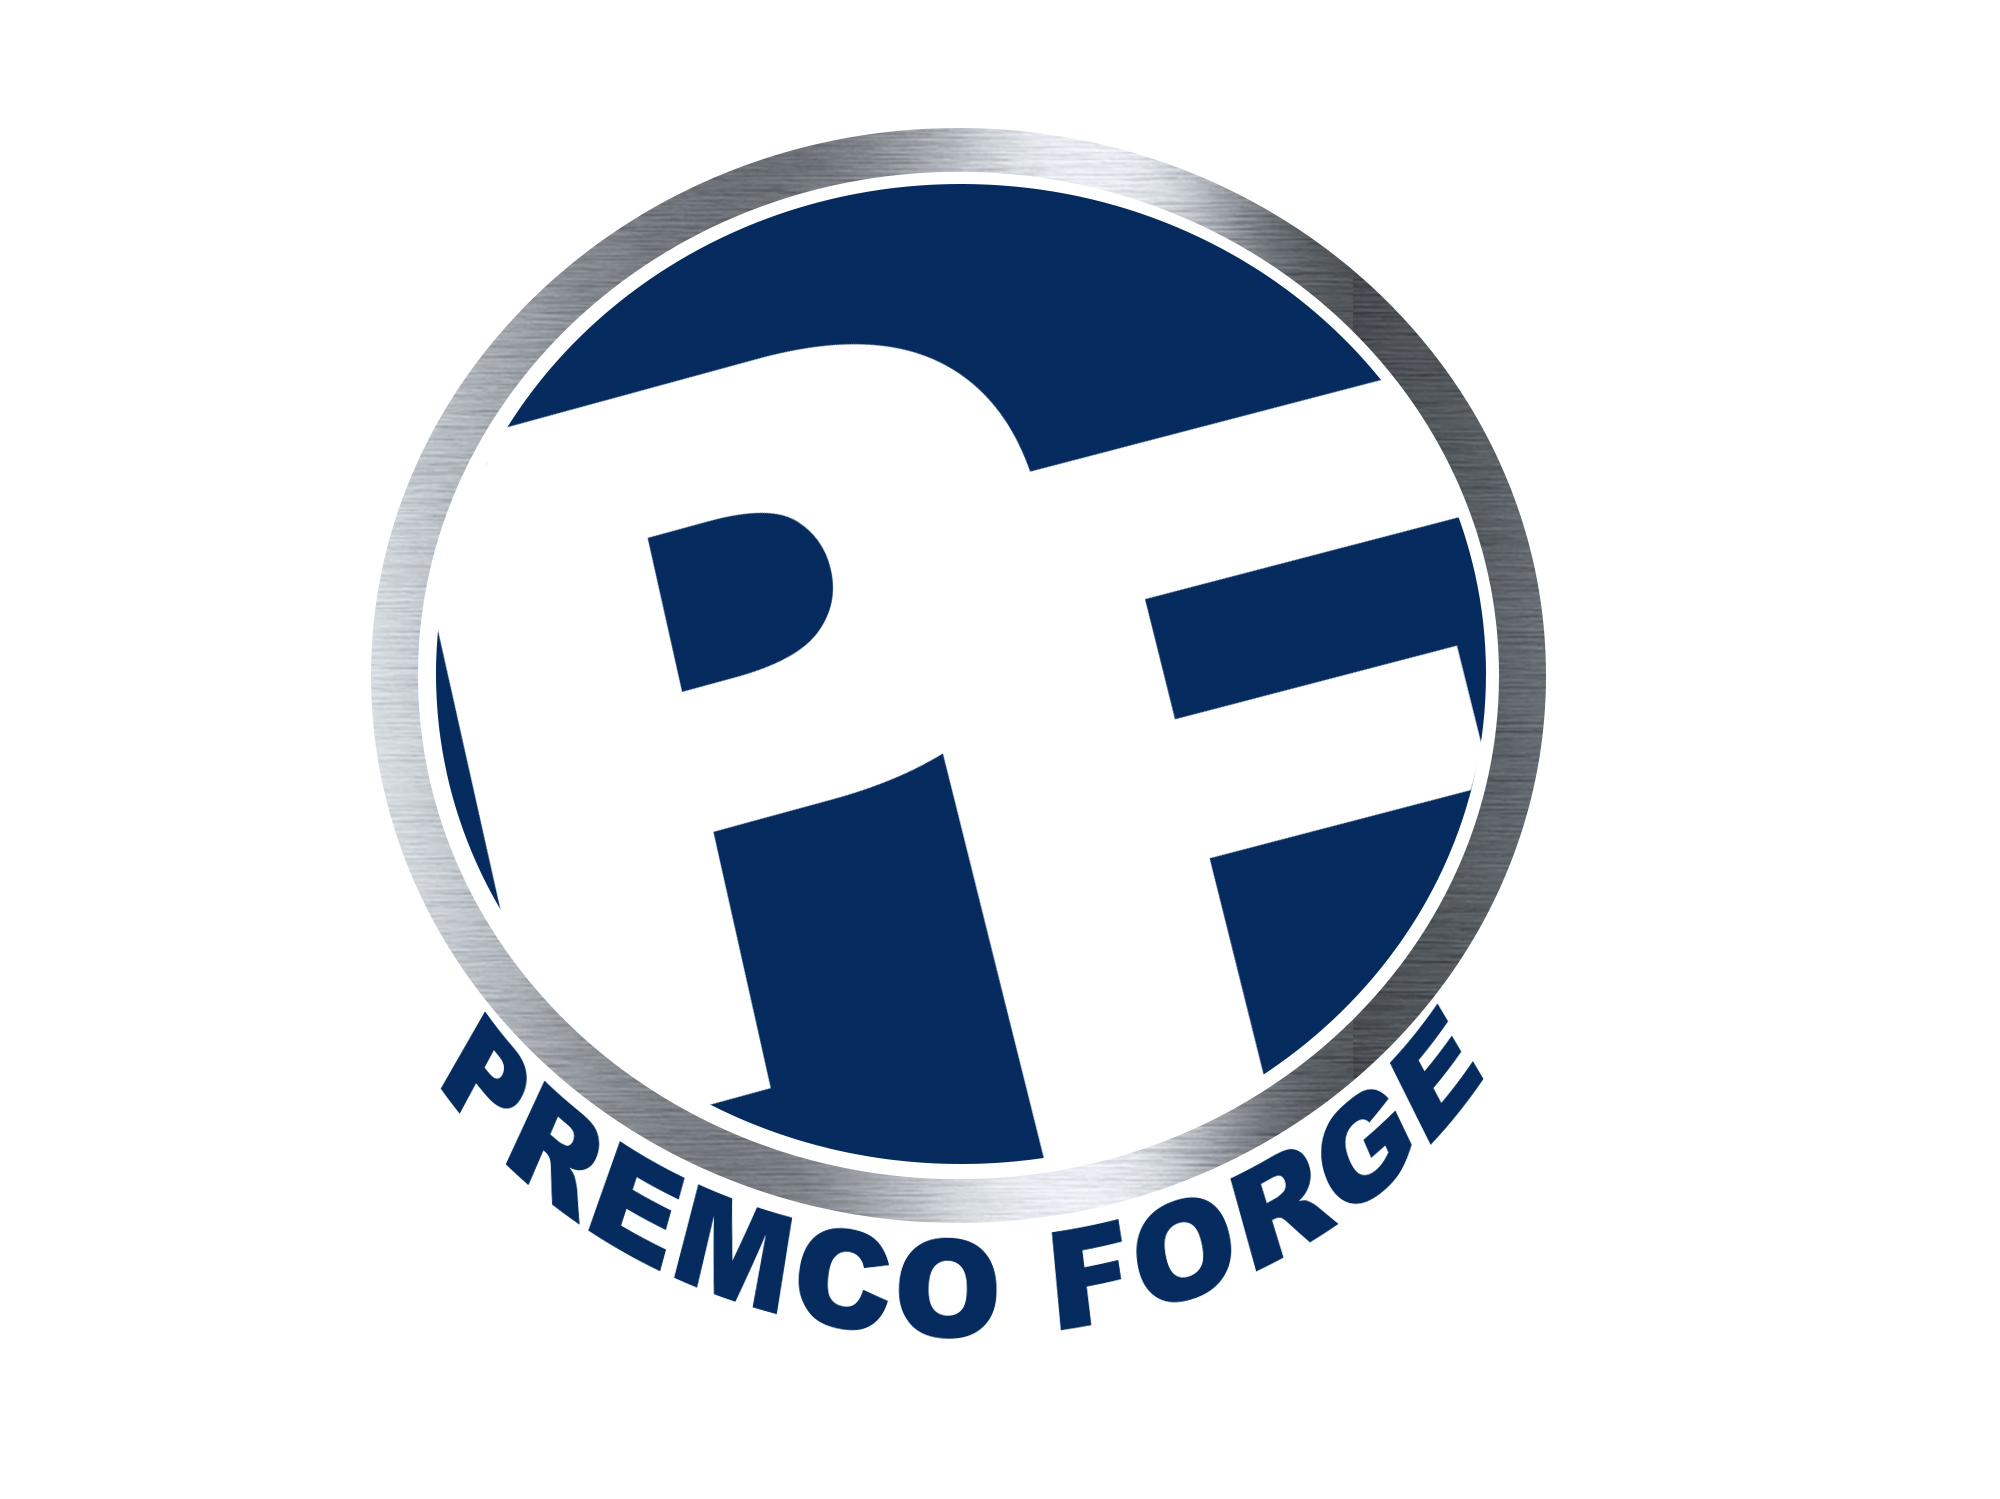 Premco Hand Forge Aluminum